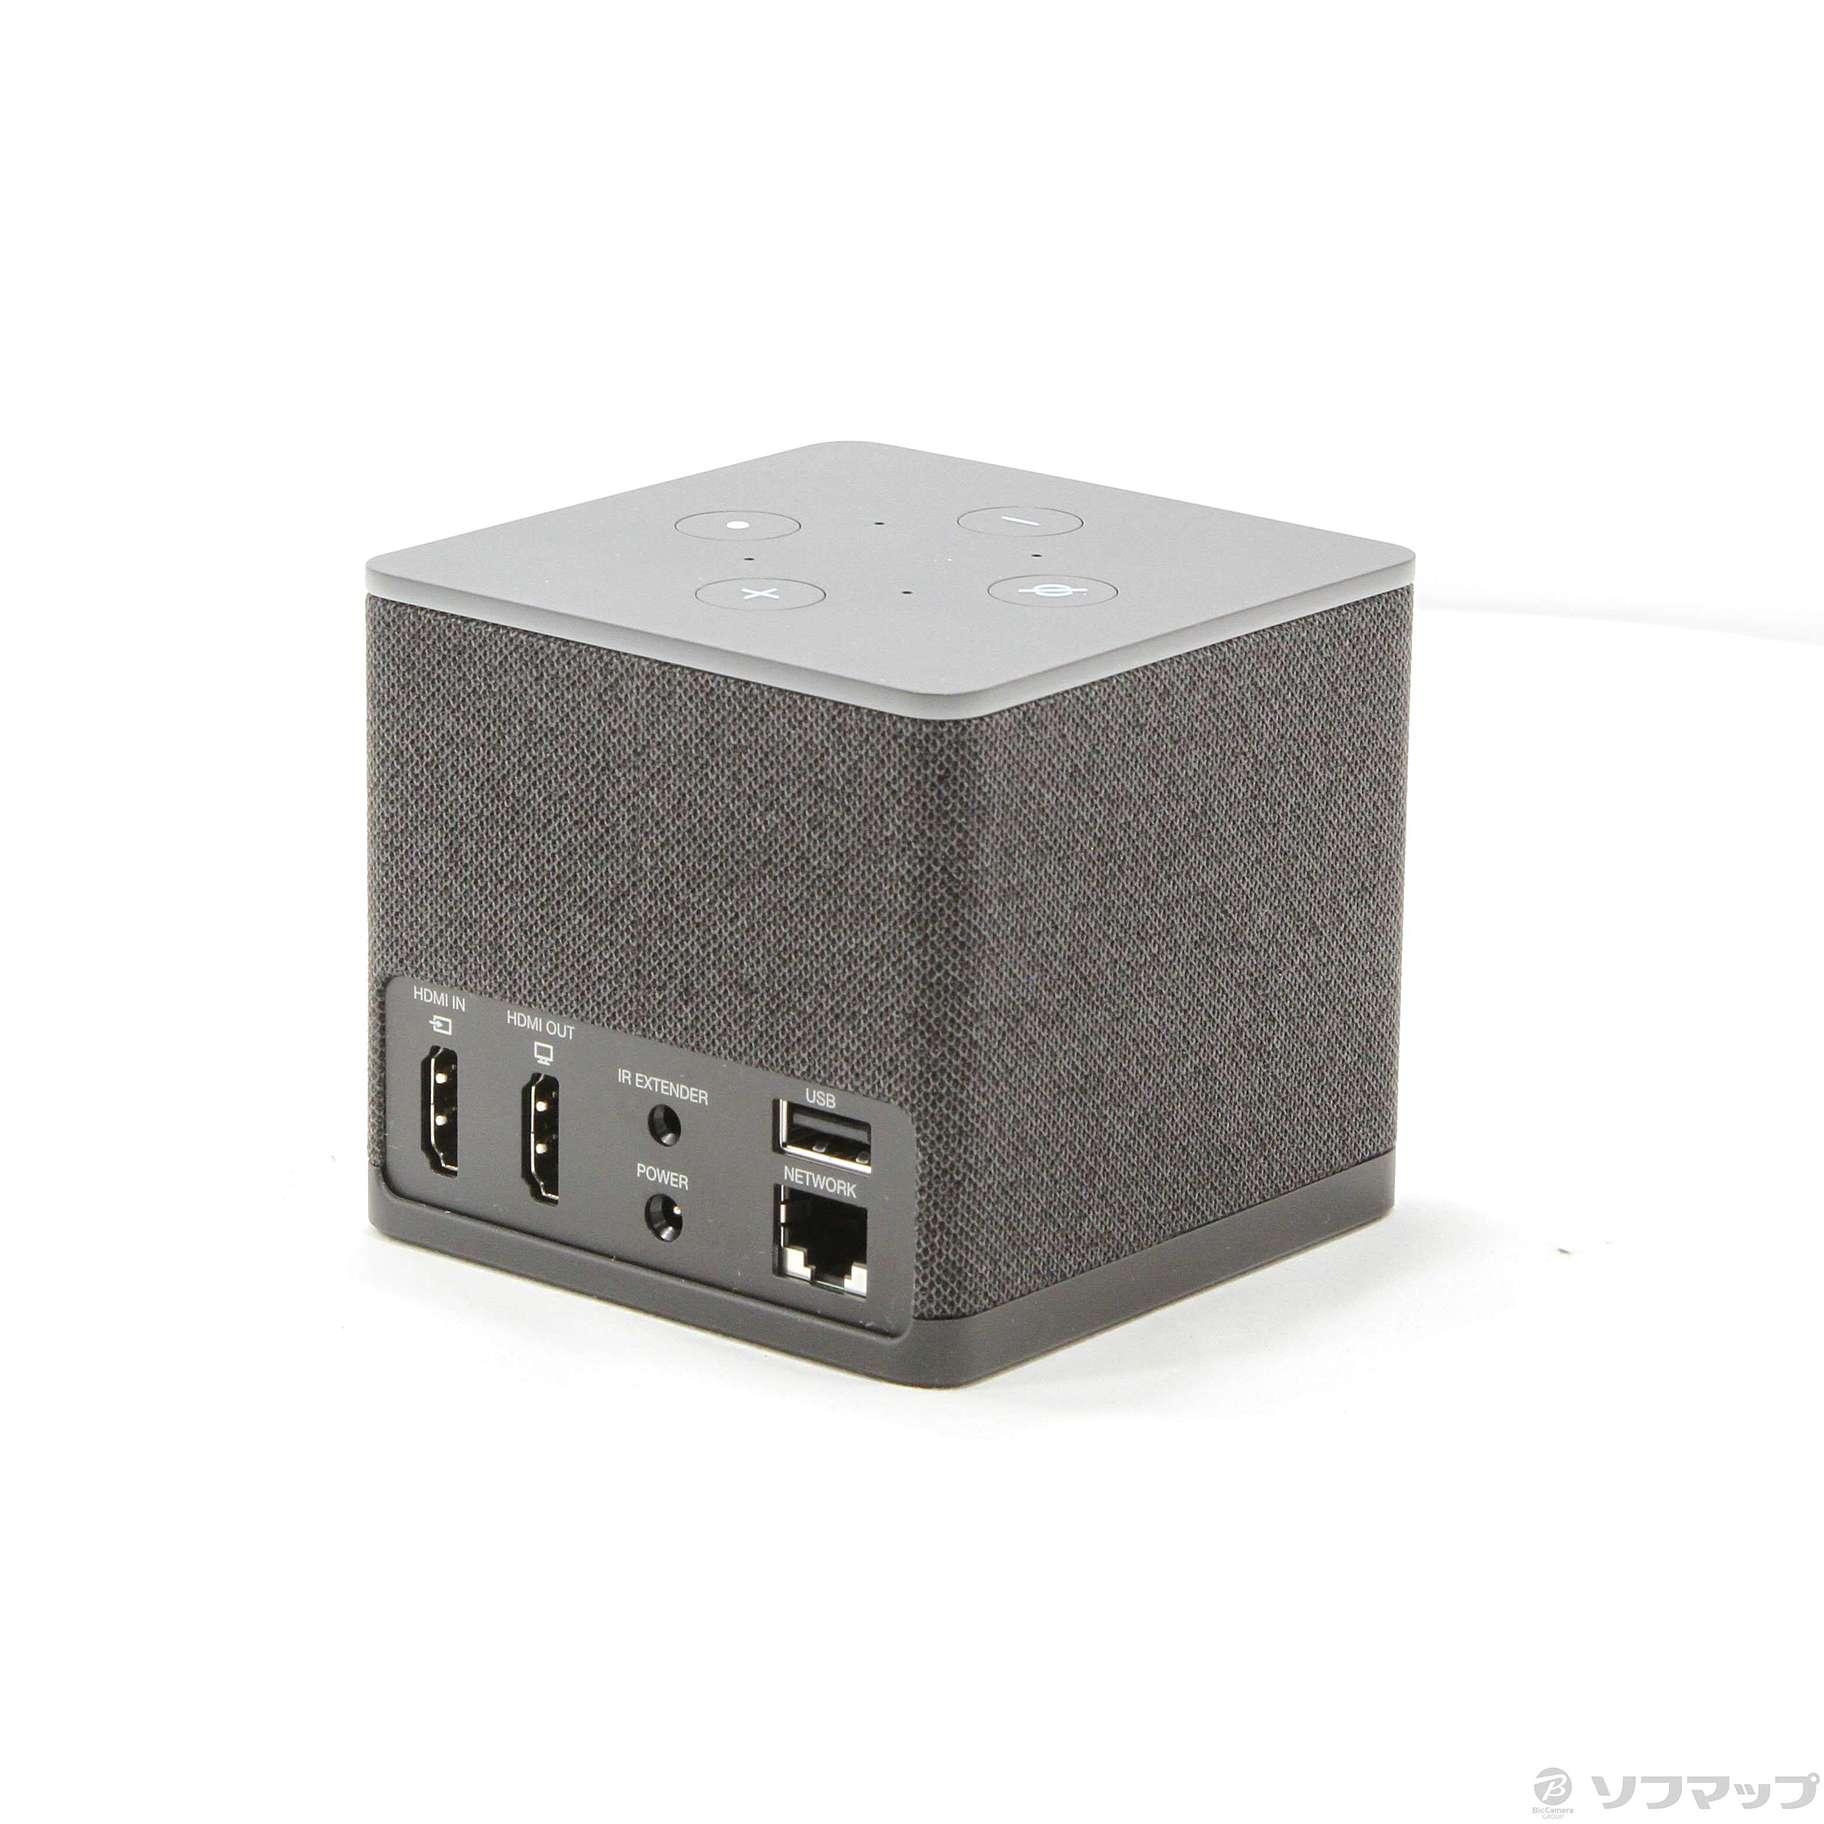 Fire TV Cube 第3世代 Alexa対応音声認識リモコン付属 ストリーミングメディアプレーヤー